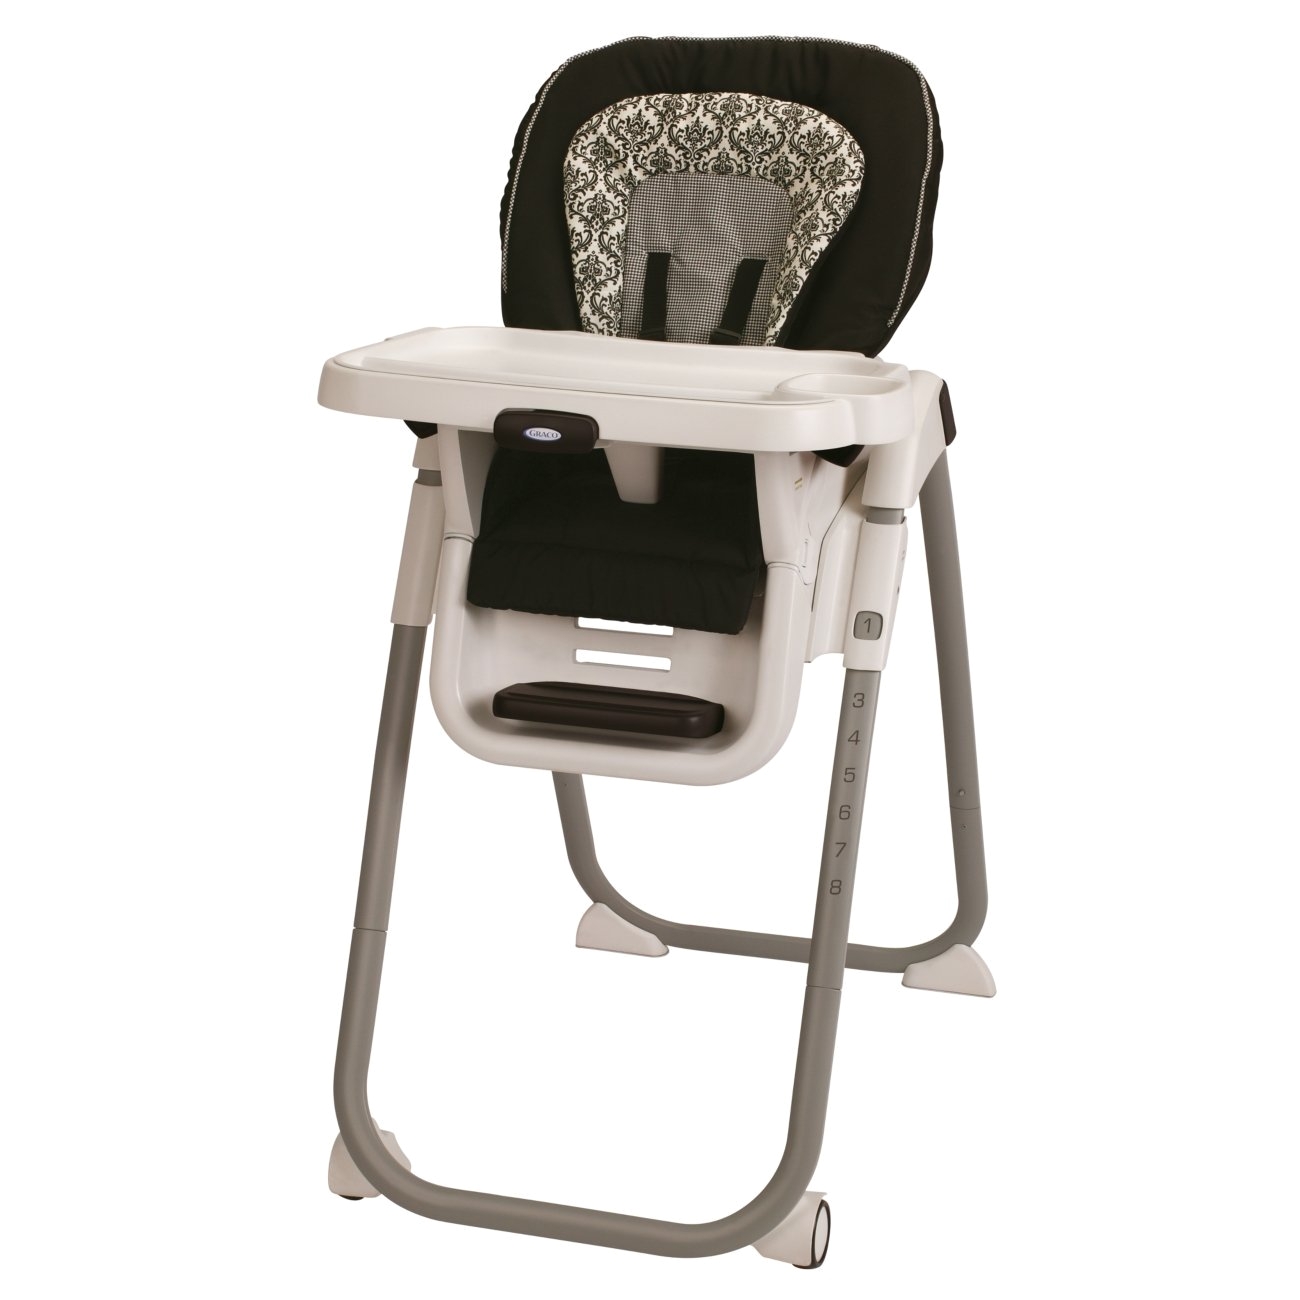 Graco Slim Spaces High Chair Stratus Graco Tablefit Rittenhouse High Chair Black White Amazon Ca Baby